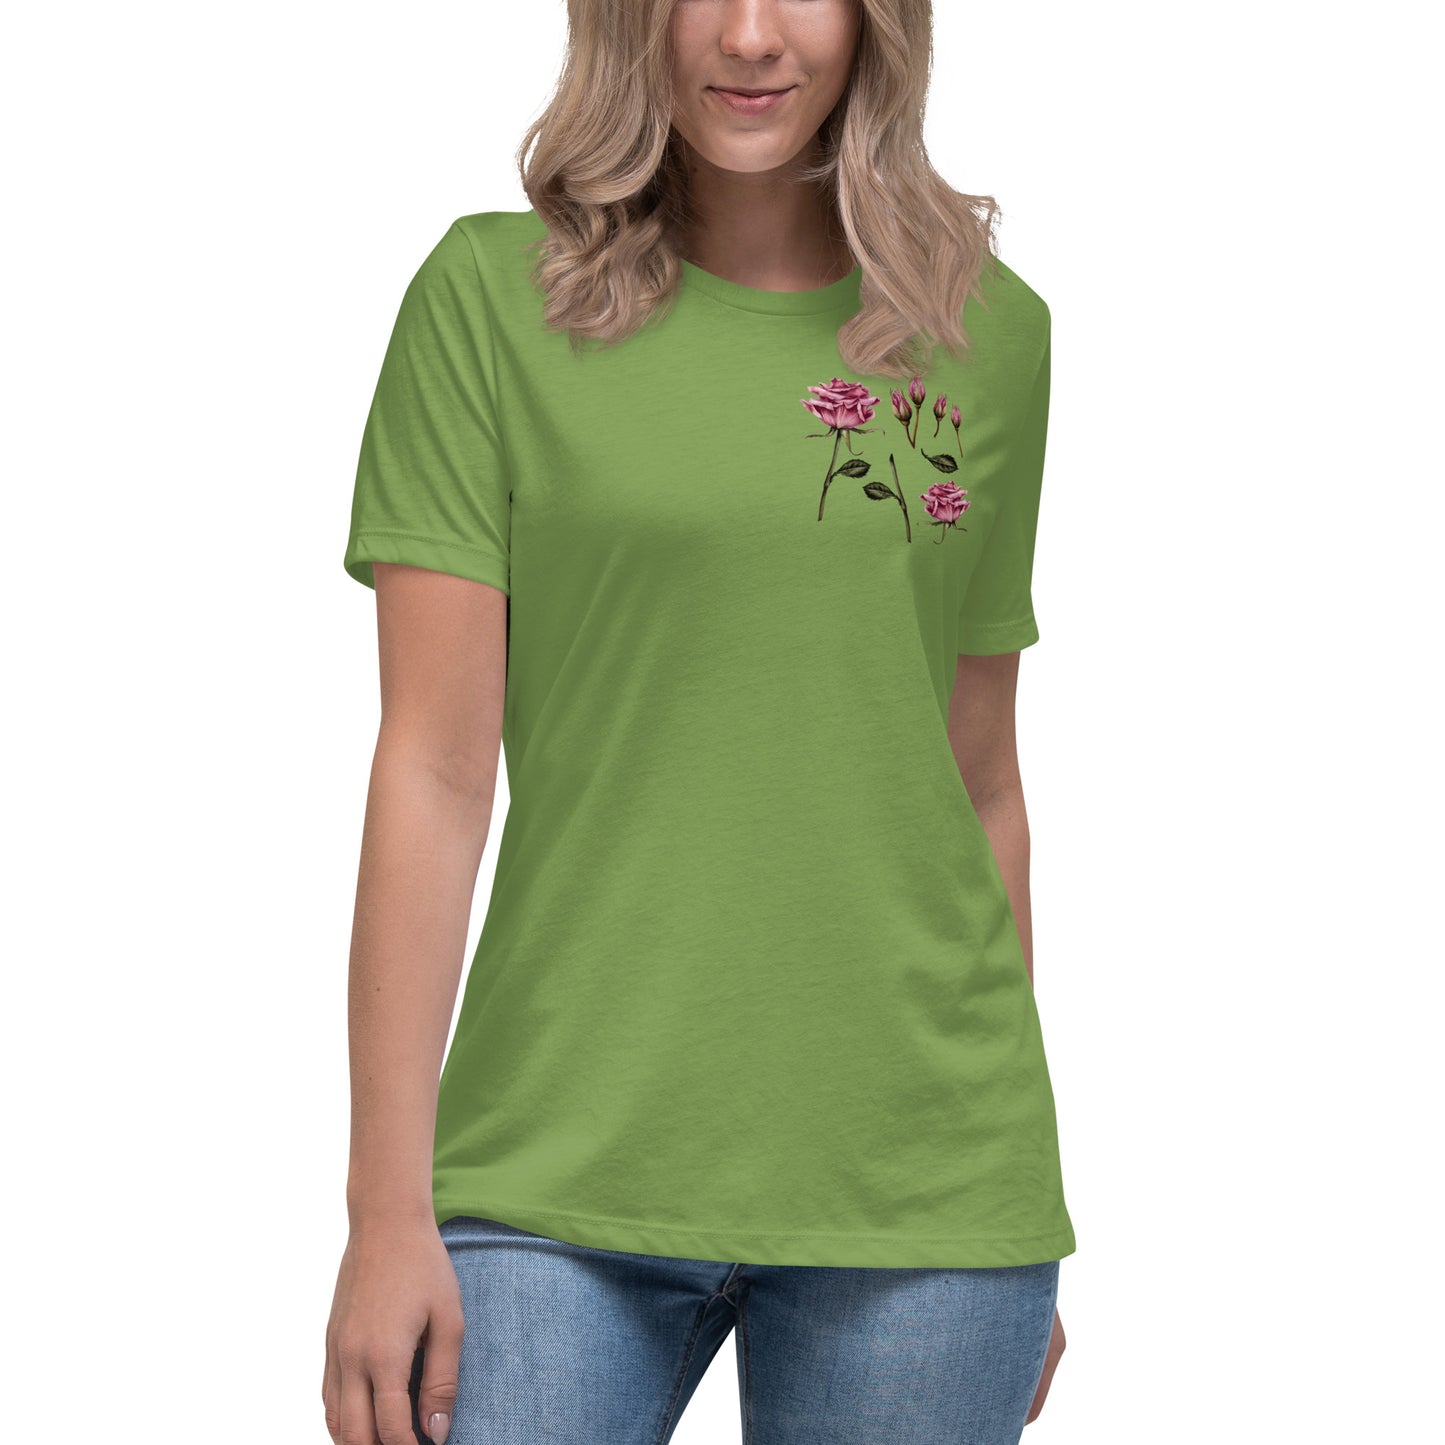 Women's Soft & Stylish Flower Print T-Shirt - Versatile & Comfortable